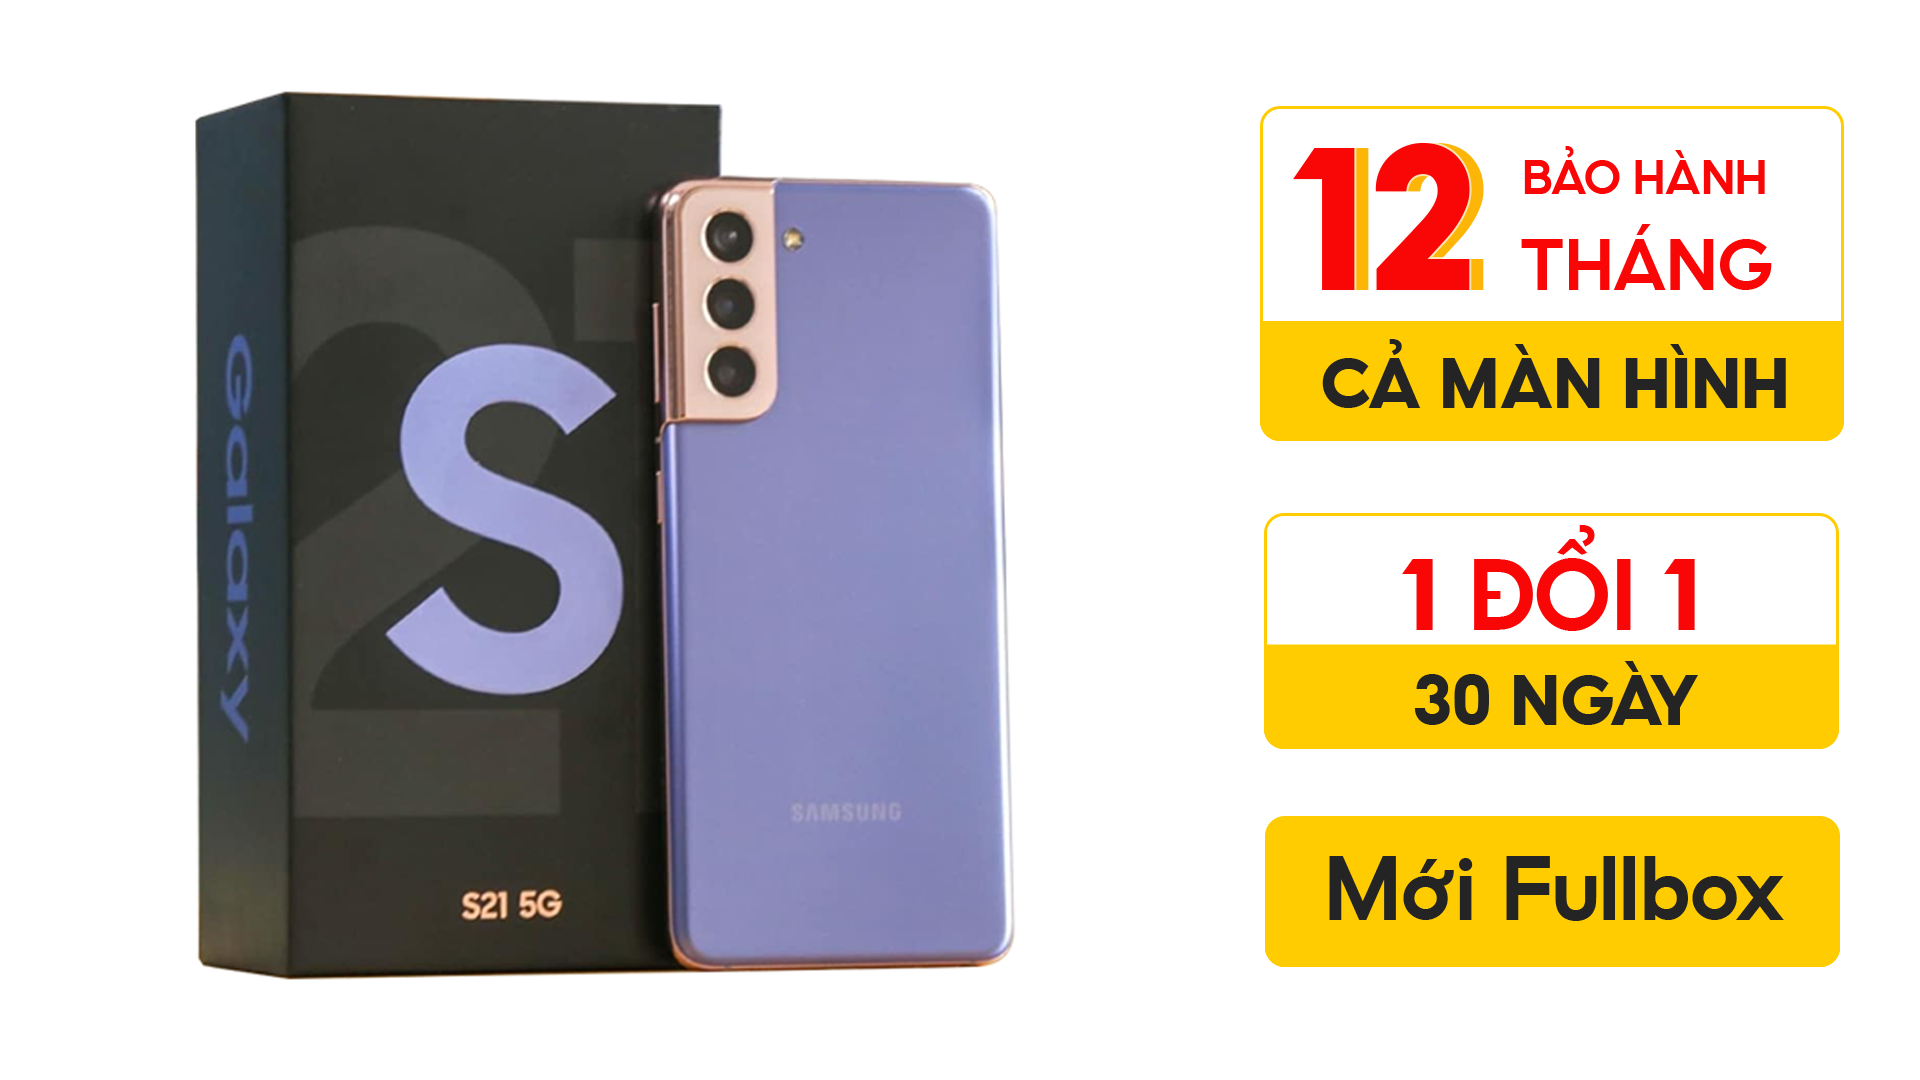 Samsung S21 5G Mỹ 8G/128G 2 Sim - Mới Fullbox